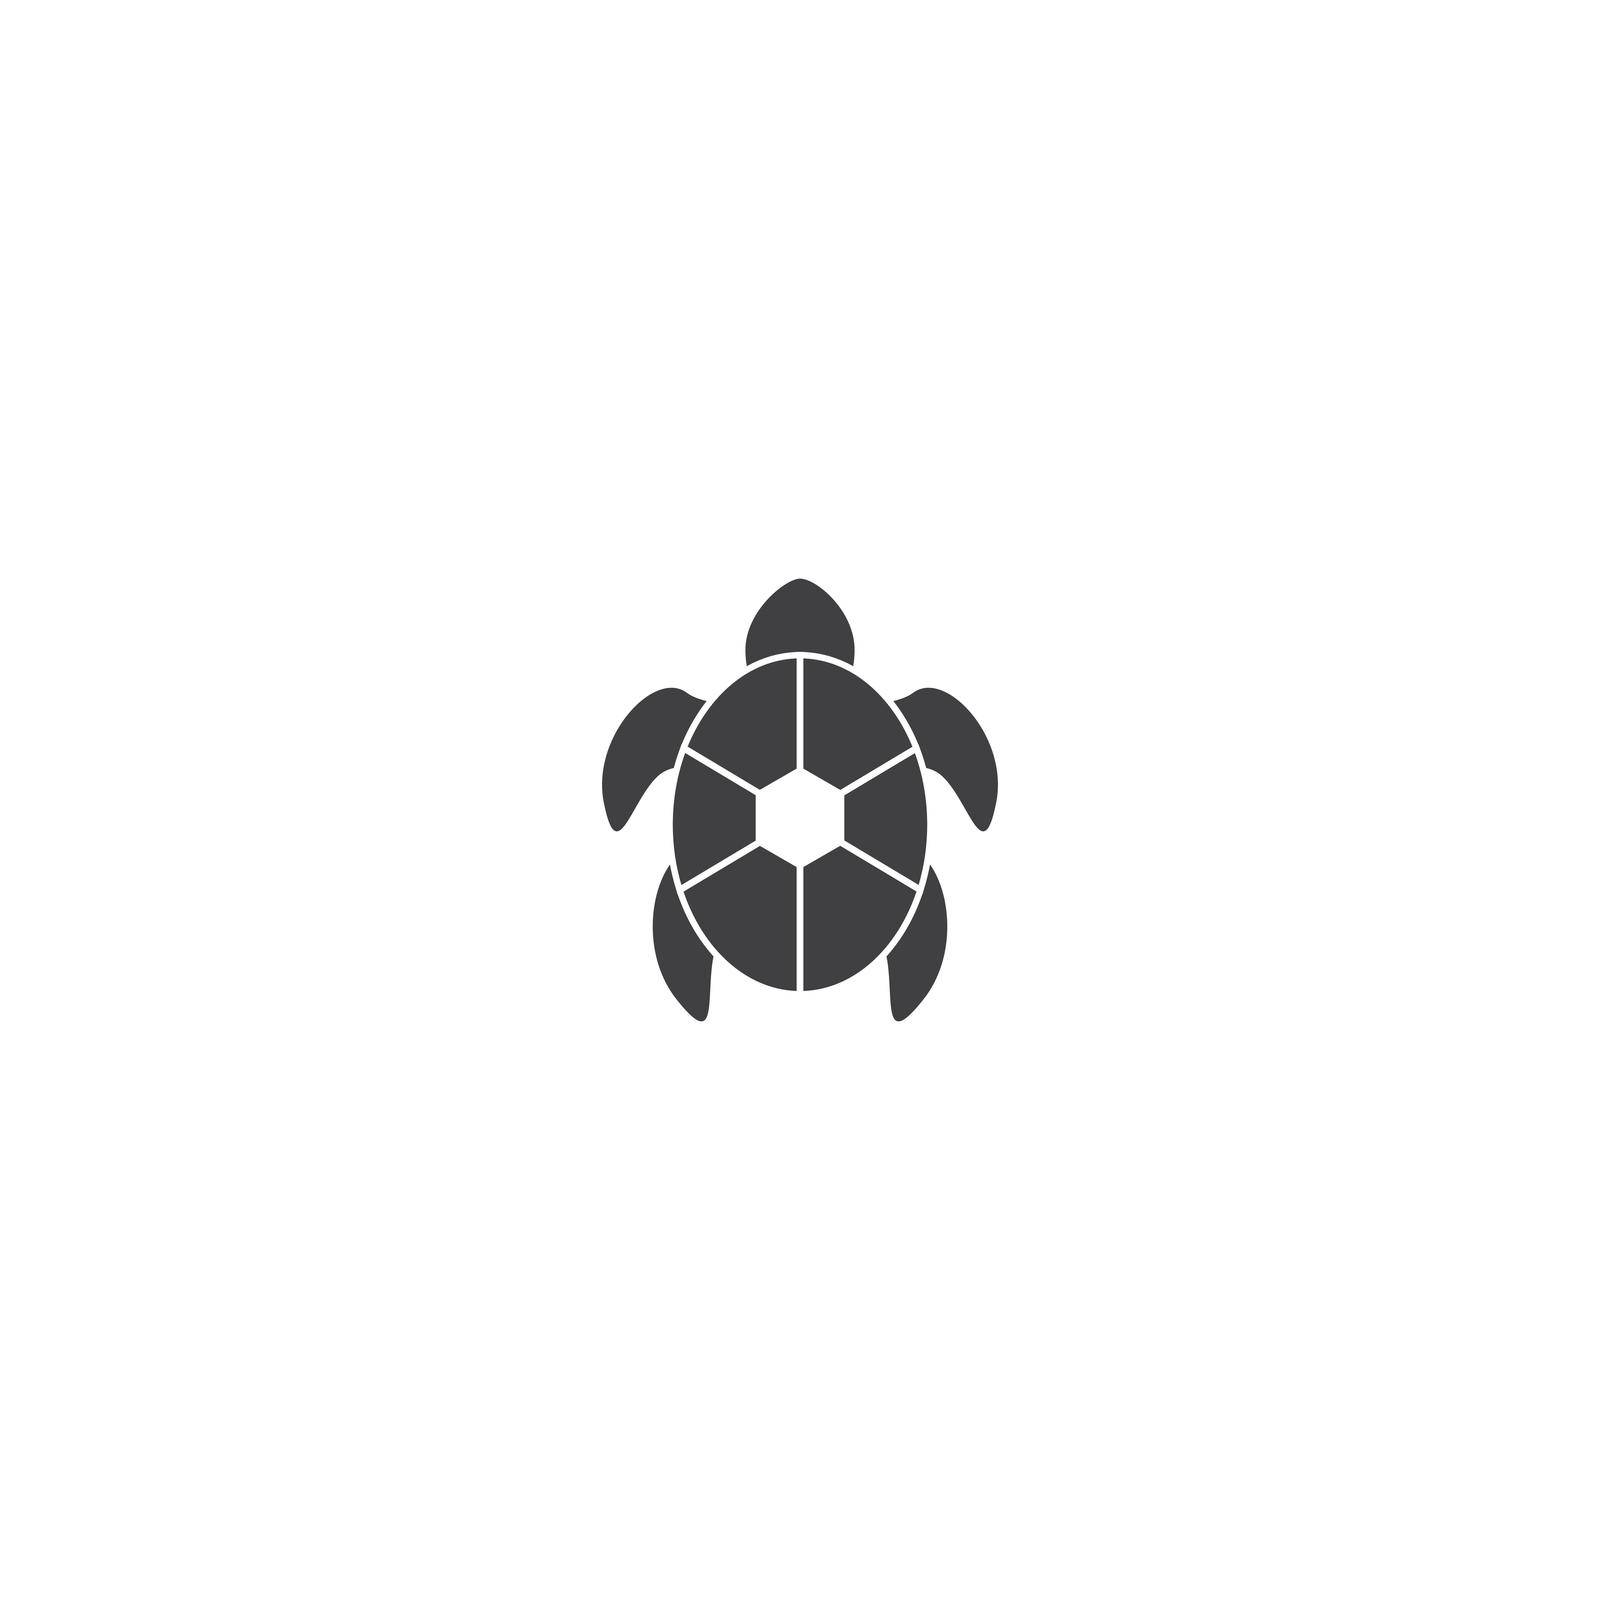 Turtle logo vector illustration design